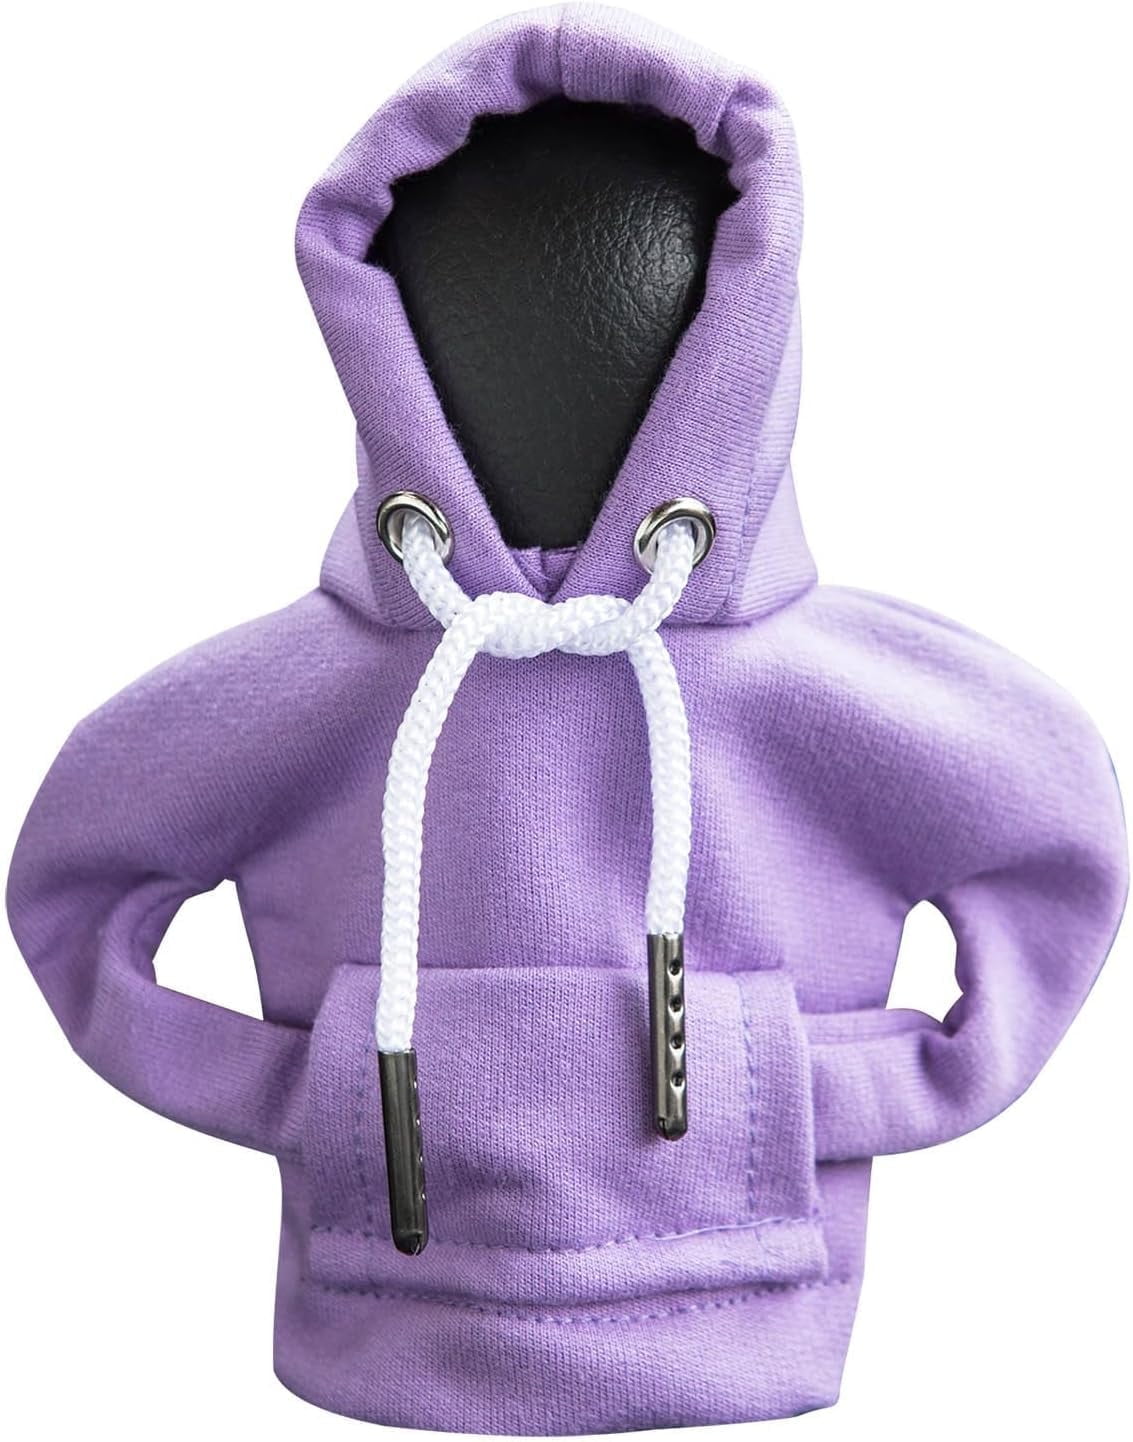 Cool Car Gear Shift Knob Sweater Hoodie Adjustable Car Accessories Interior